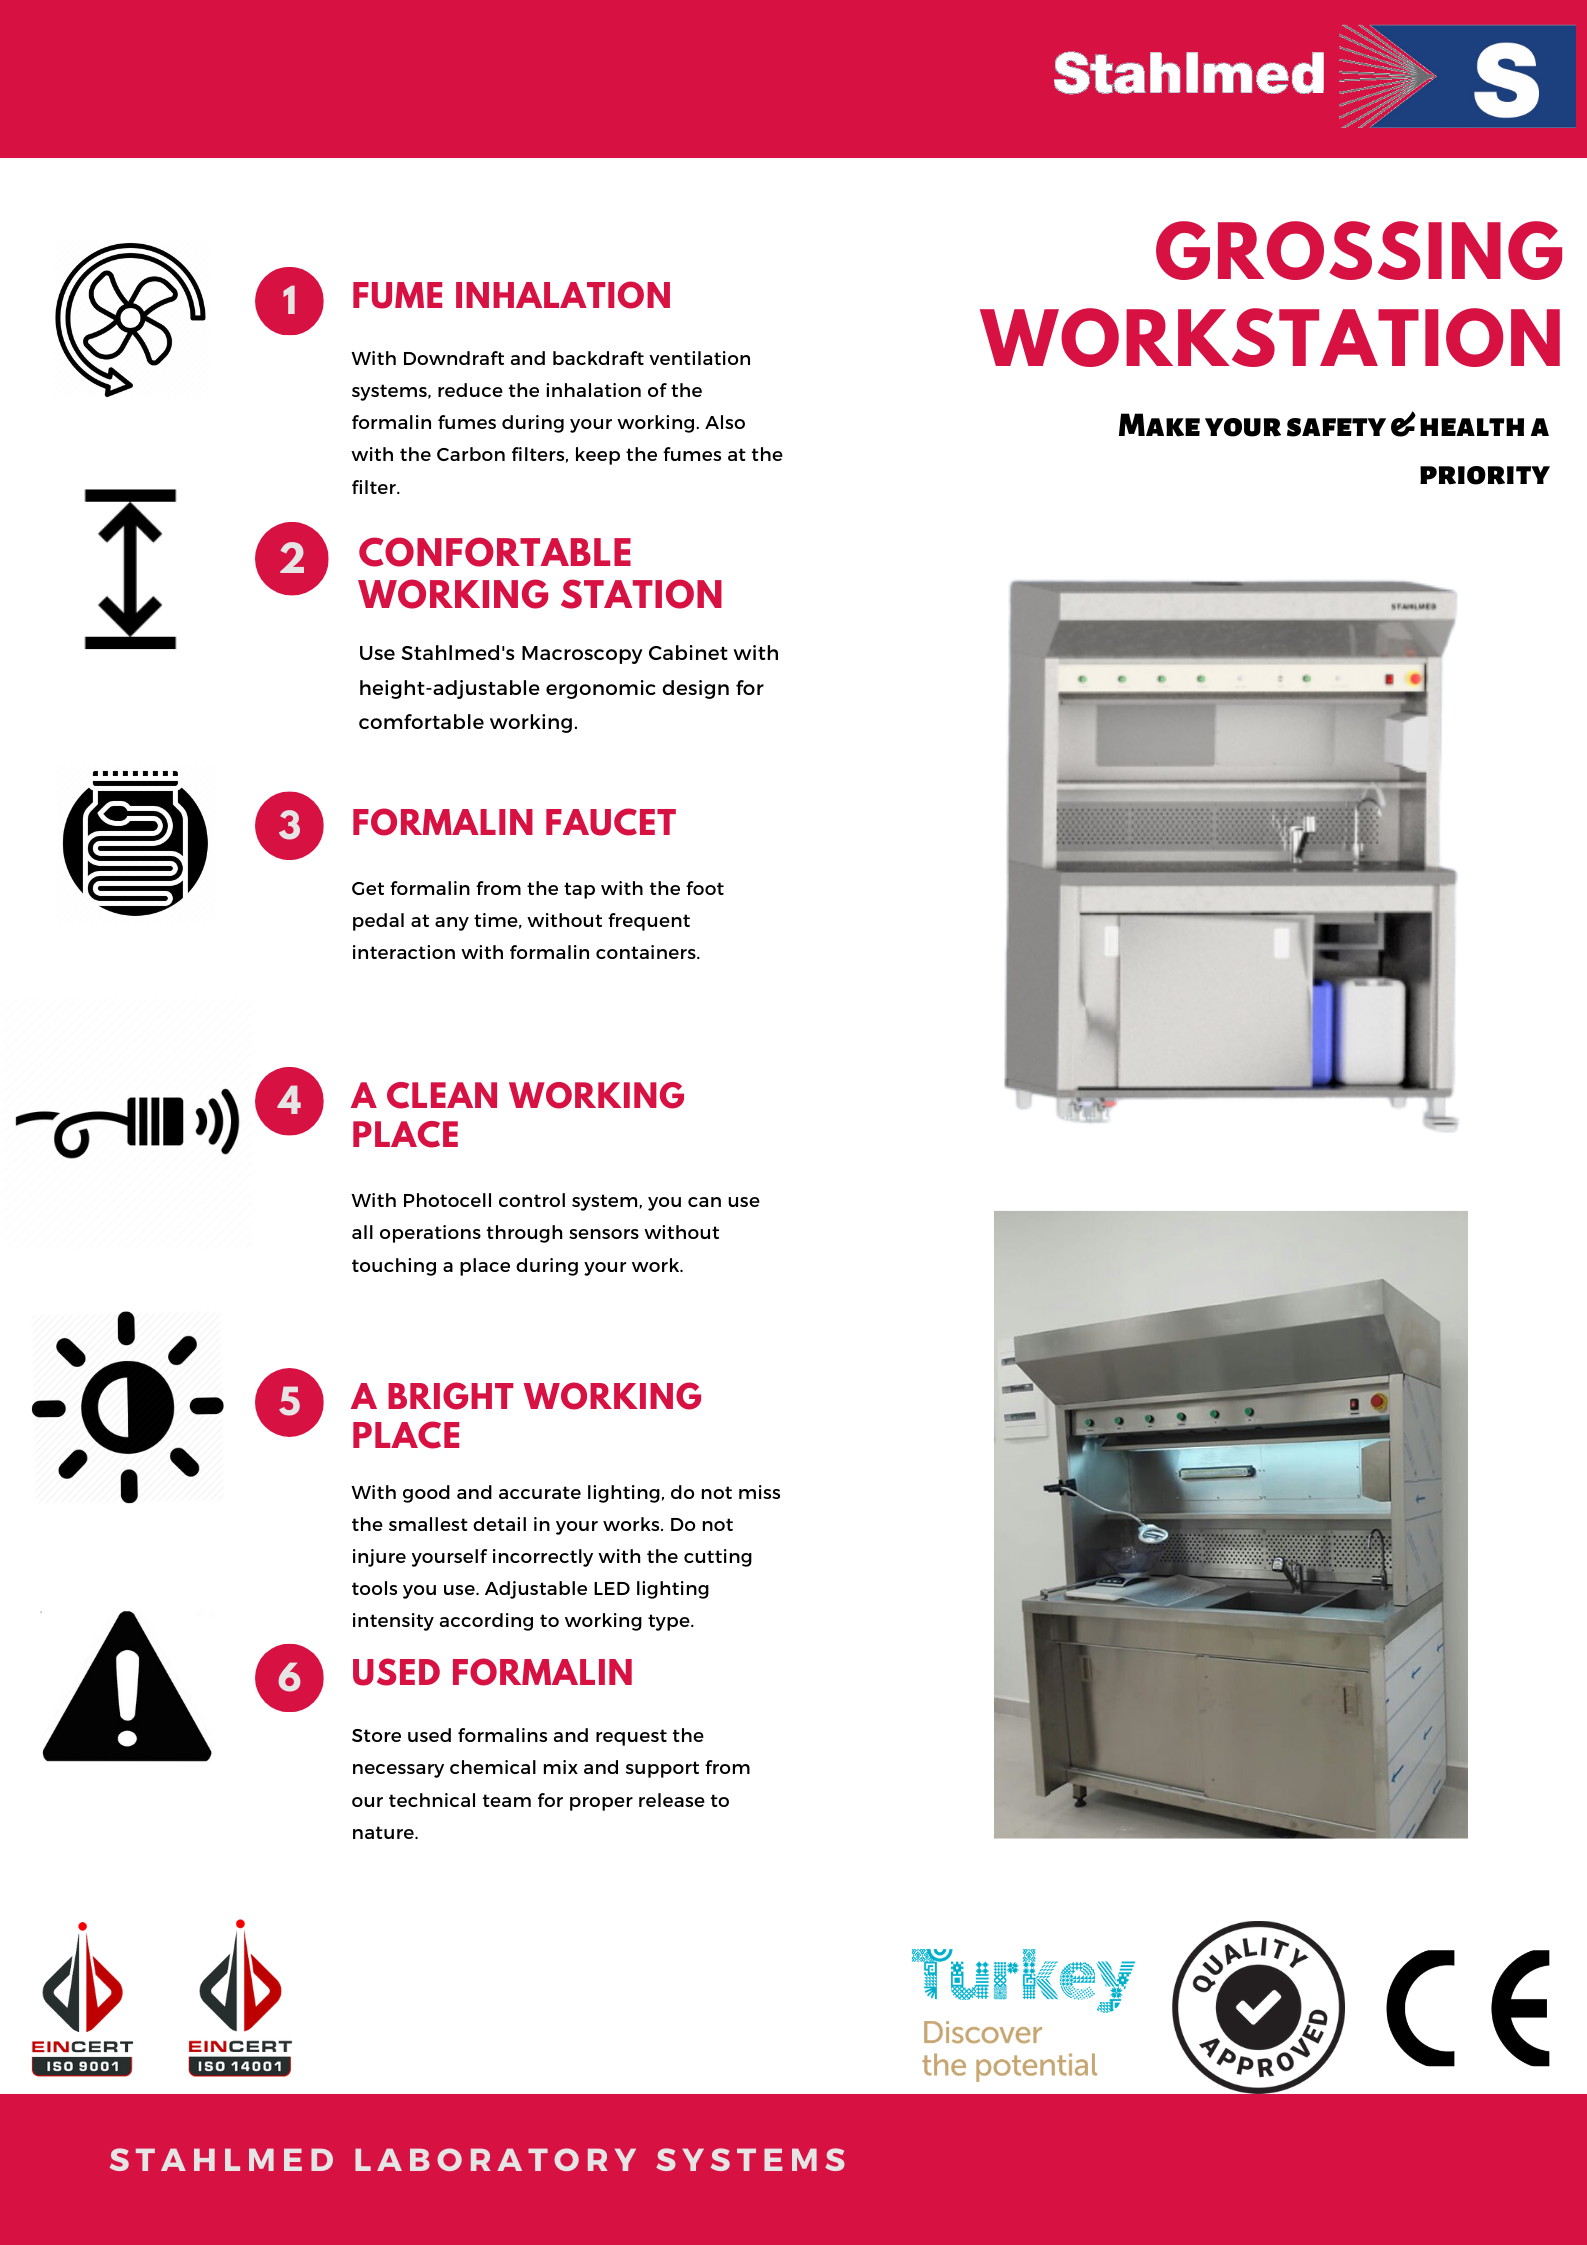 Grossing Workstation | Stahlmed Laboratory System | Stahlmed Laboratory ...